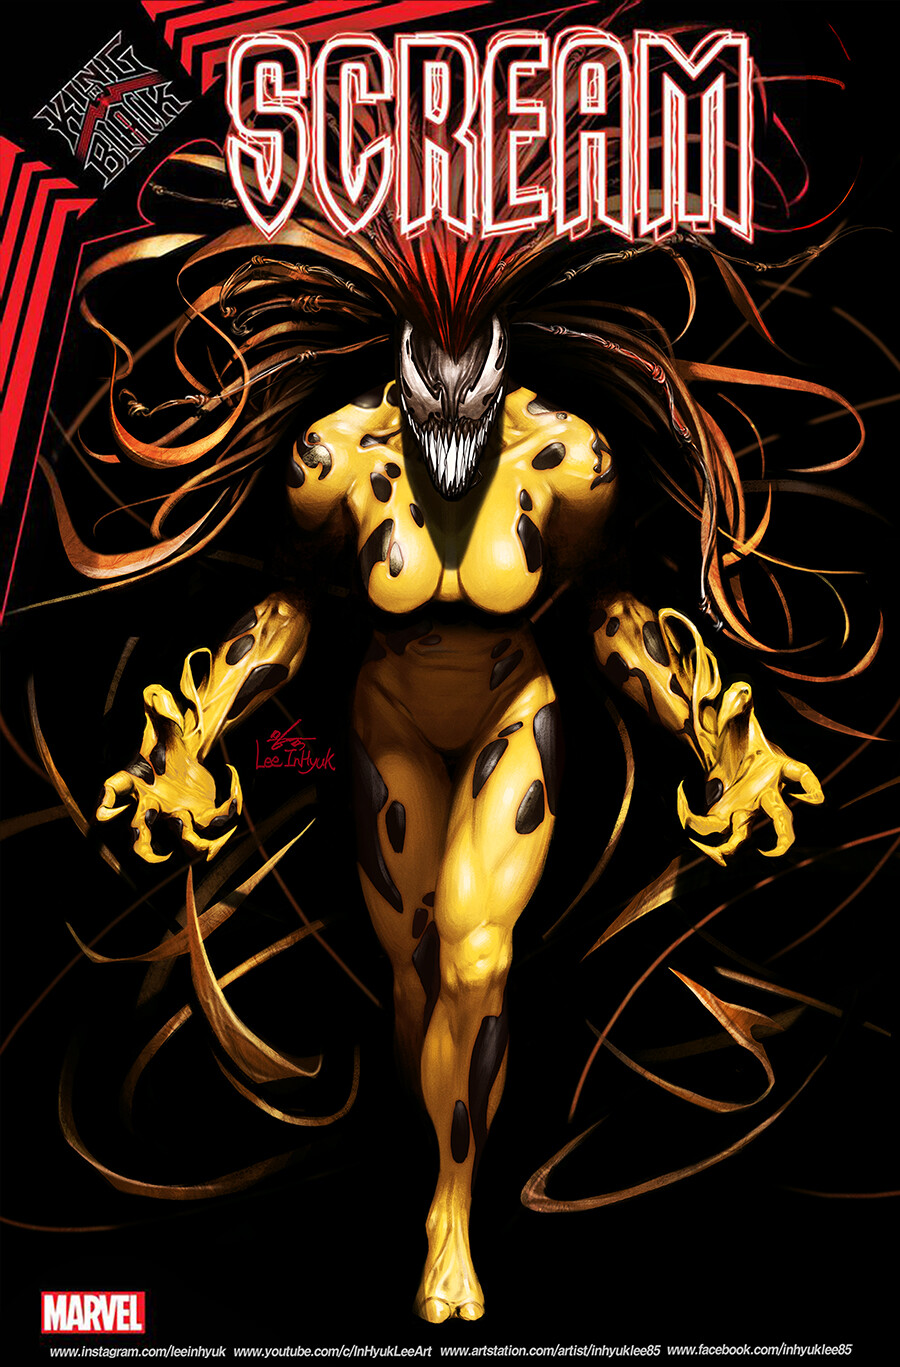 https://www.cbr.com/king-in-black-scream-venom-offspring-marvel-event/